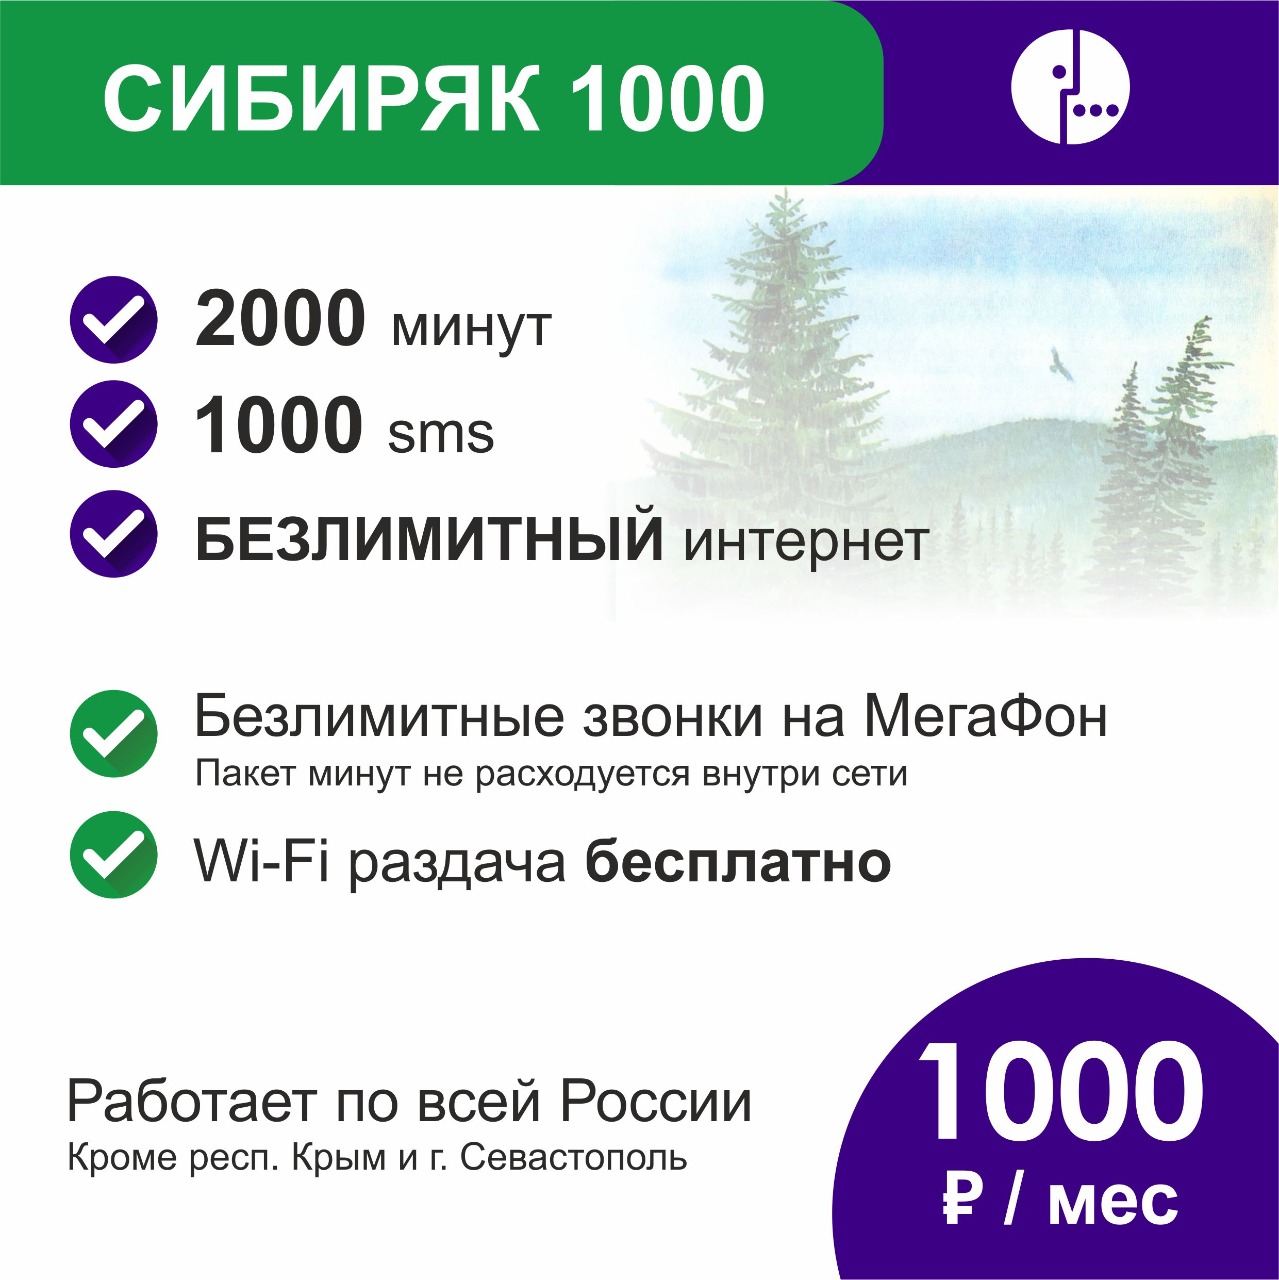 Саяногорск Инфо - whatsapp-image-2020-08-21-at-114742-1.jpeg, Скачано: 464